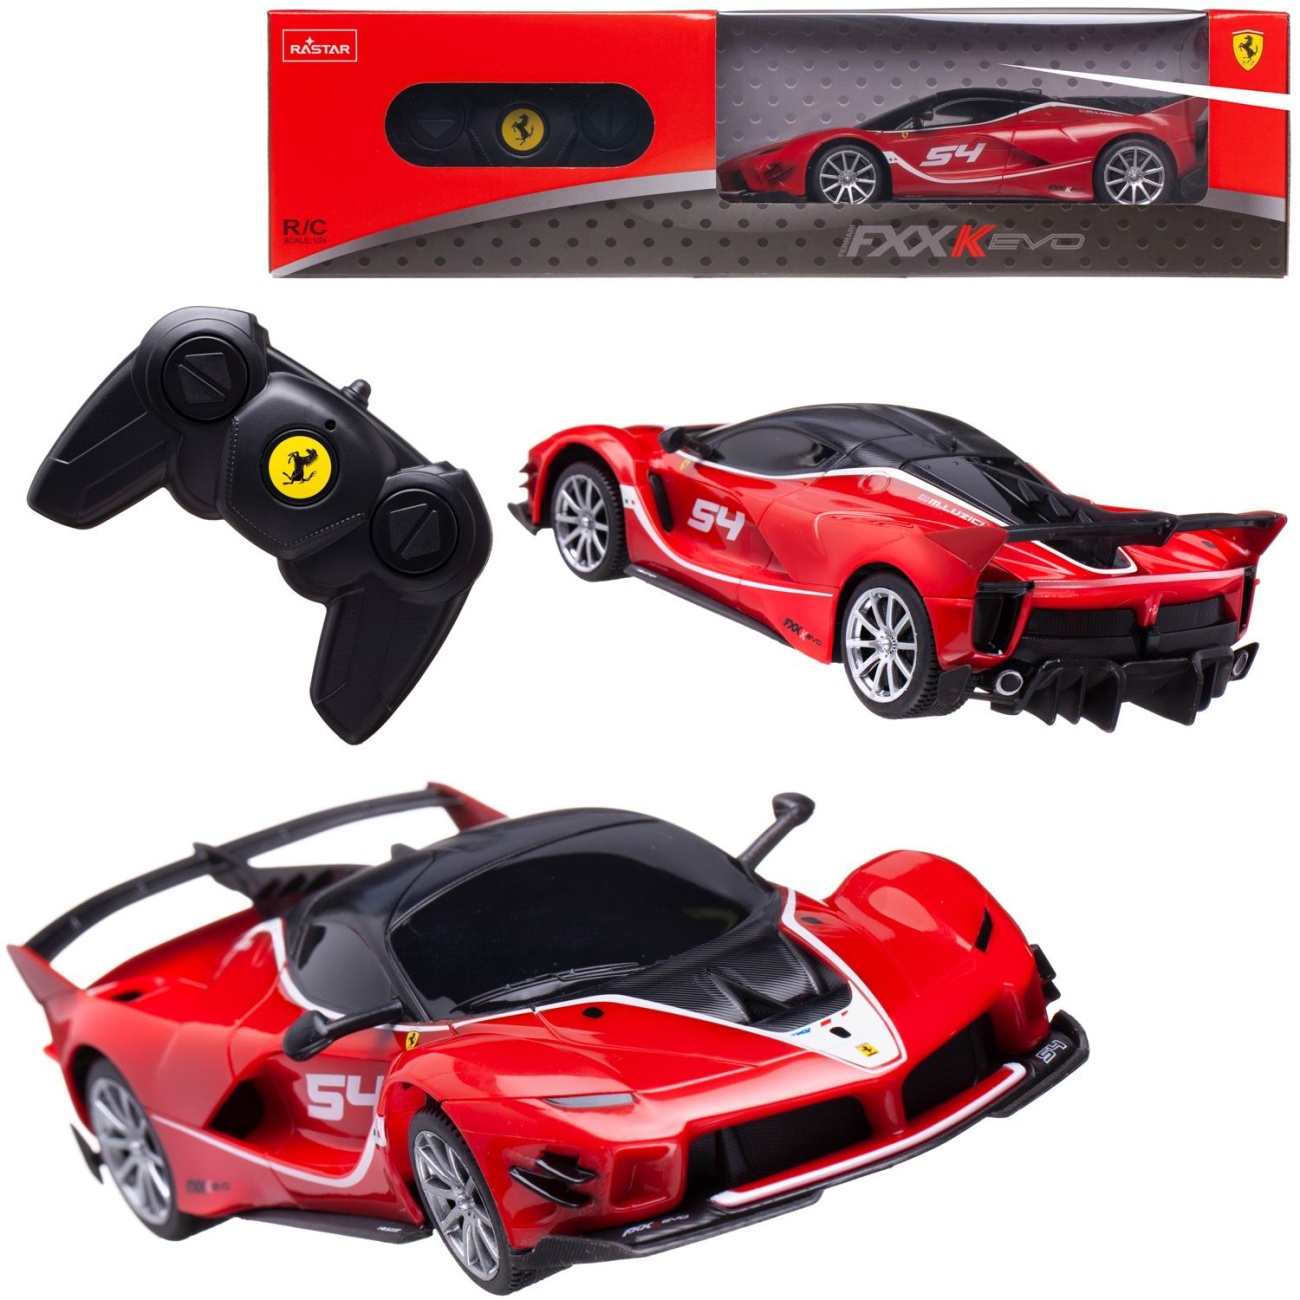 Машина р/у 1:24 Ferrari FXX K Evo красный, 2,4 G. Rastar 79300R